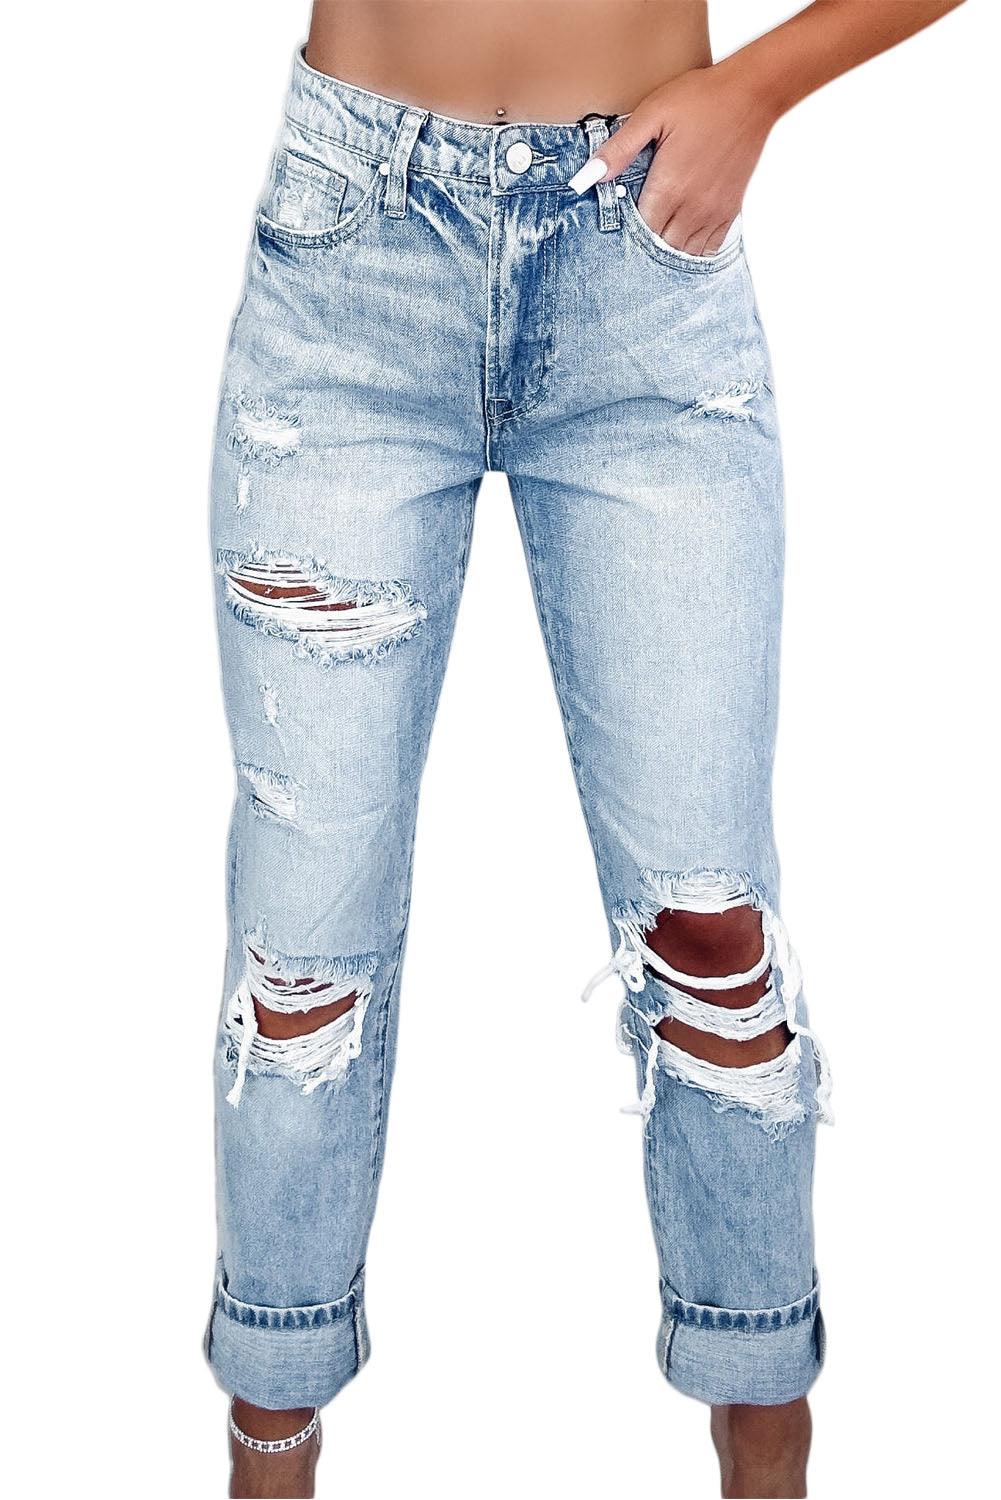 Sky Blue Light Wash Frayed Slim Fit High Waist Jeans - L & M Kee, LLC